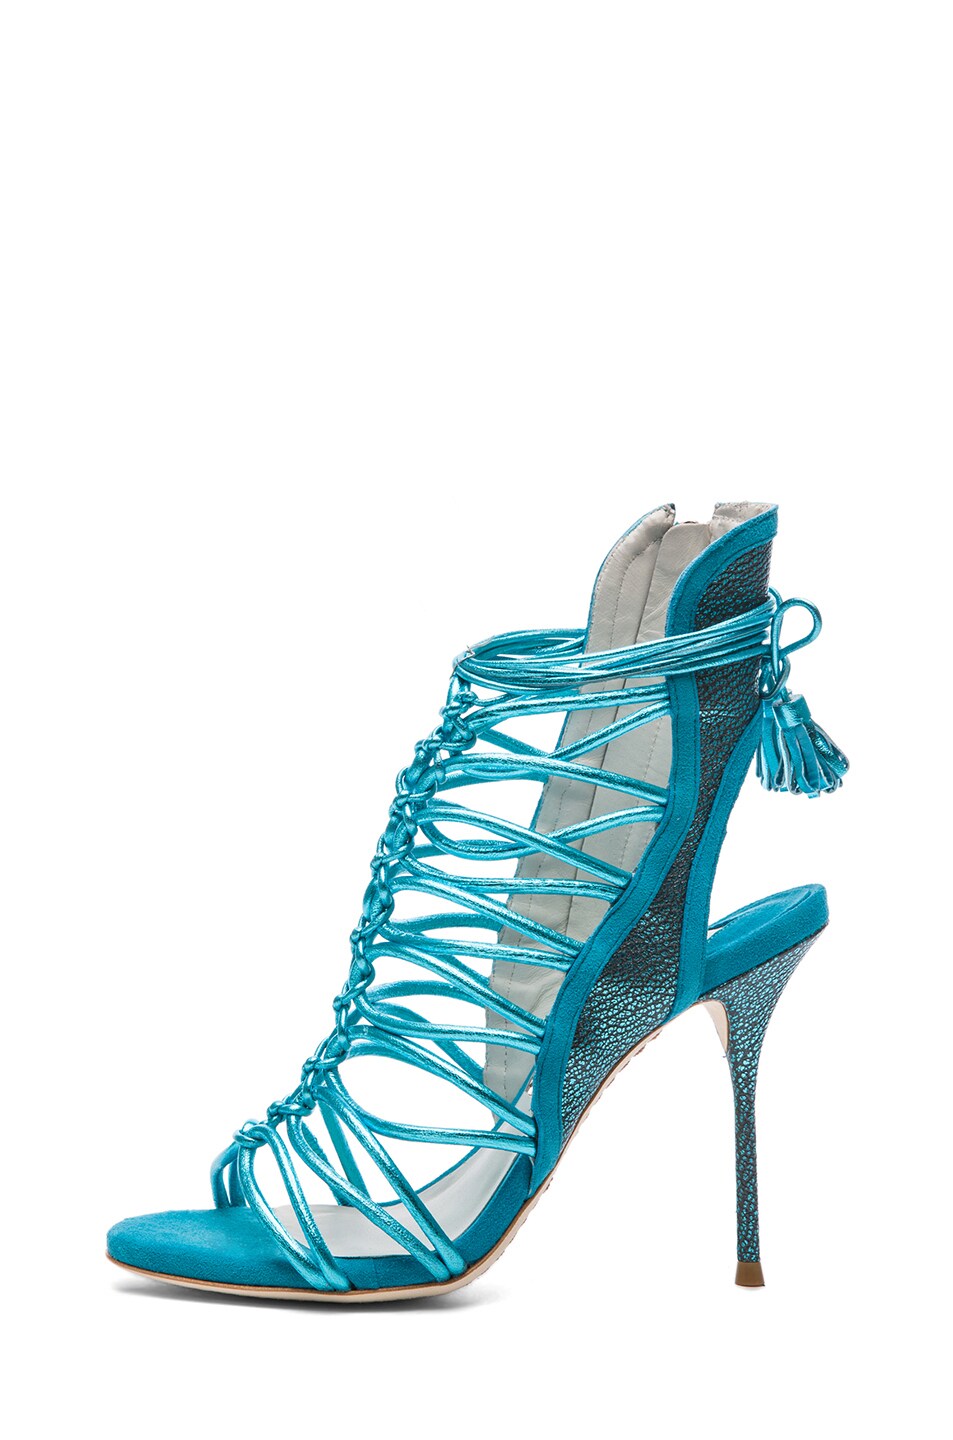 Sophia Webster Lacey Grain Metallic Leather Tie Up Heels in Turquoise ...